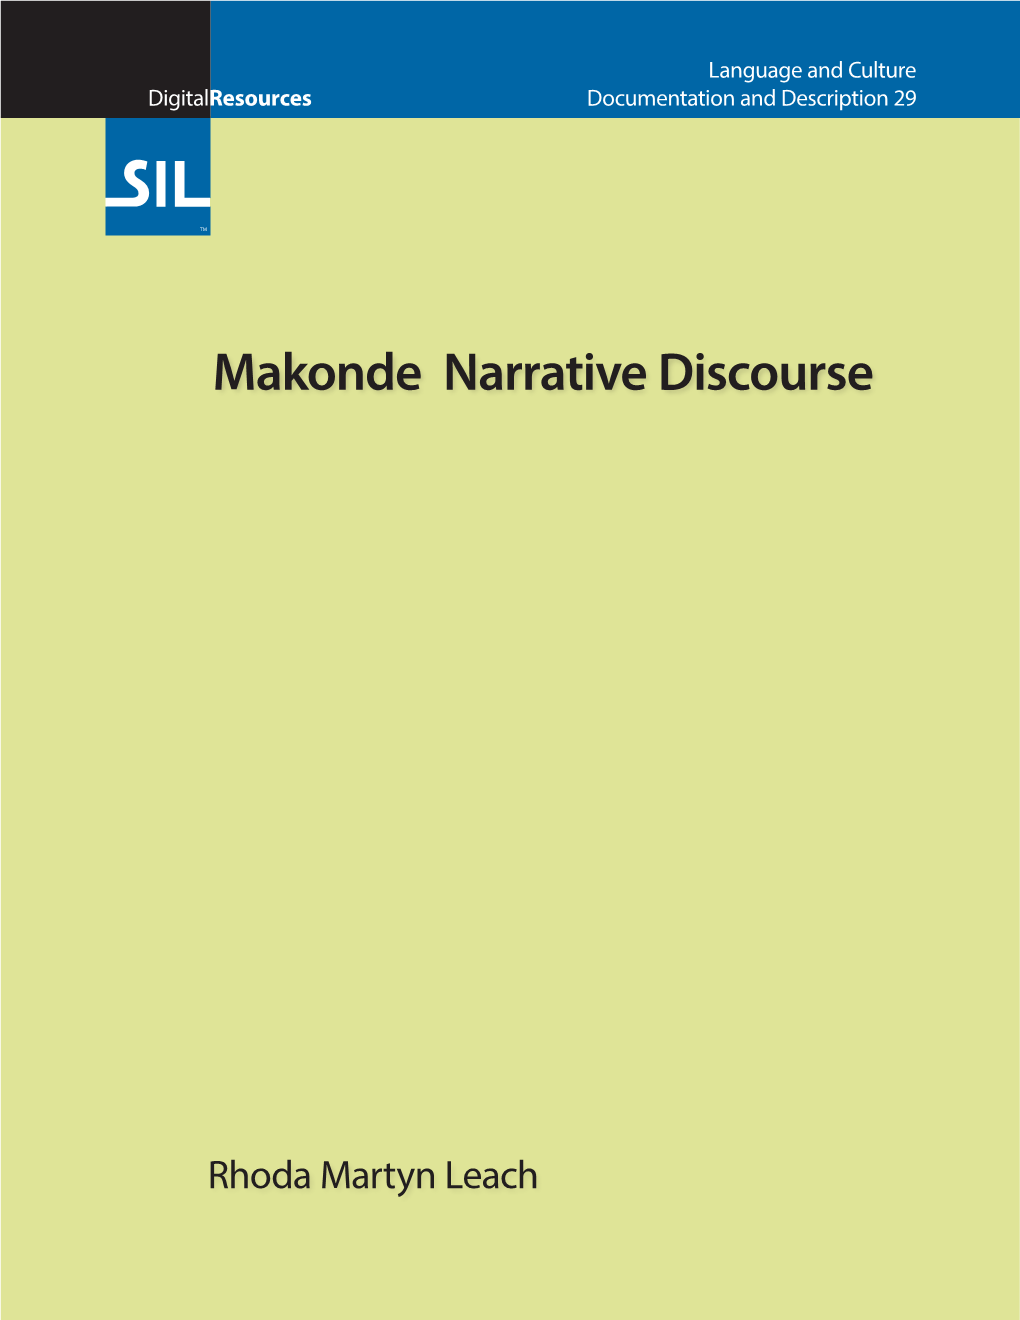 Makonde Narrative Discourse